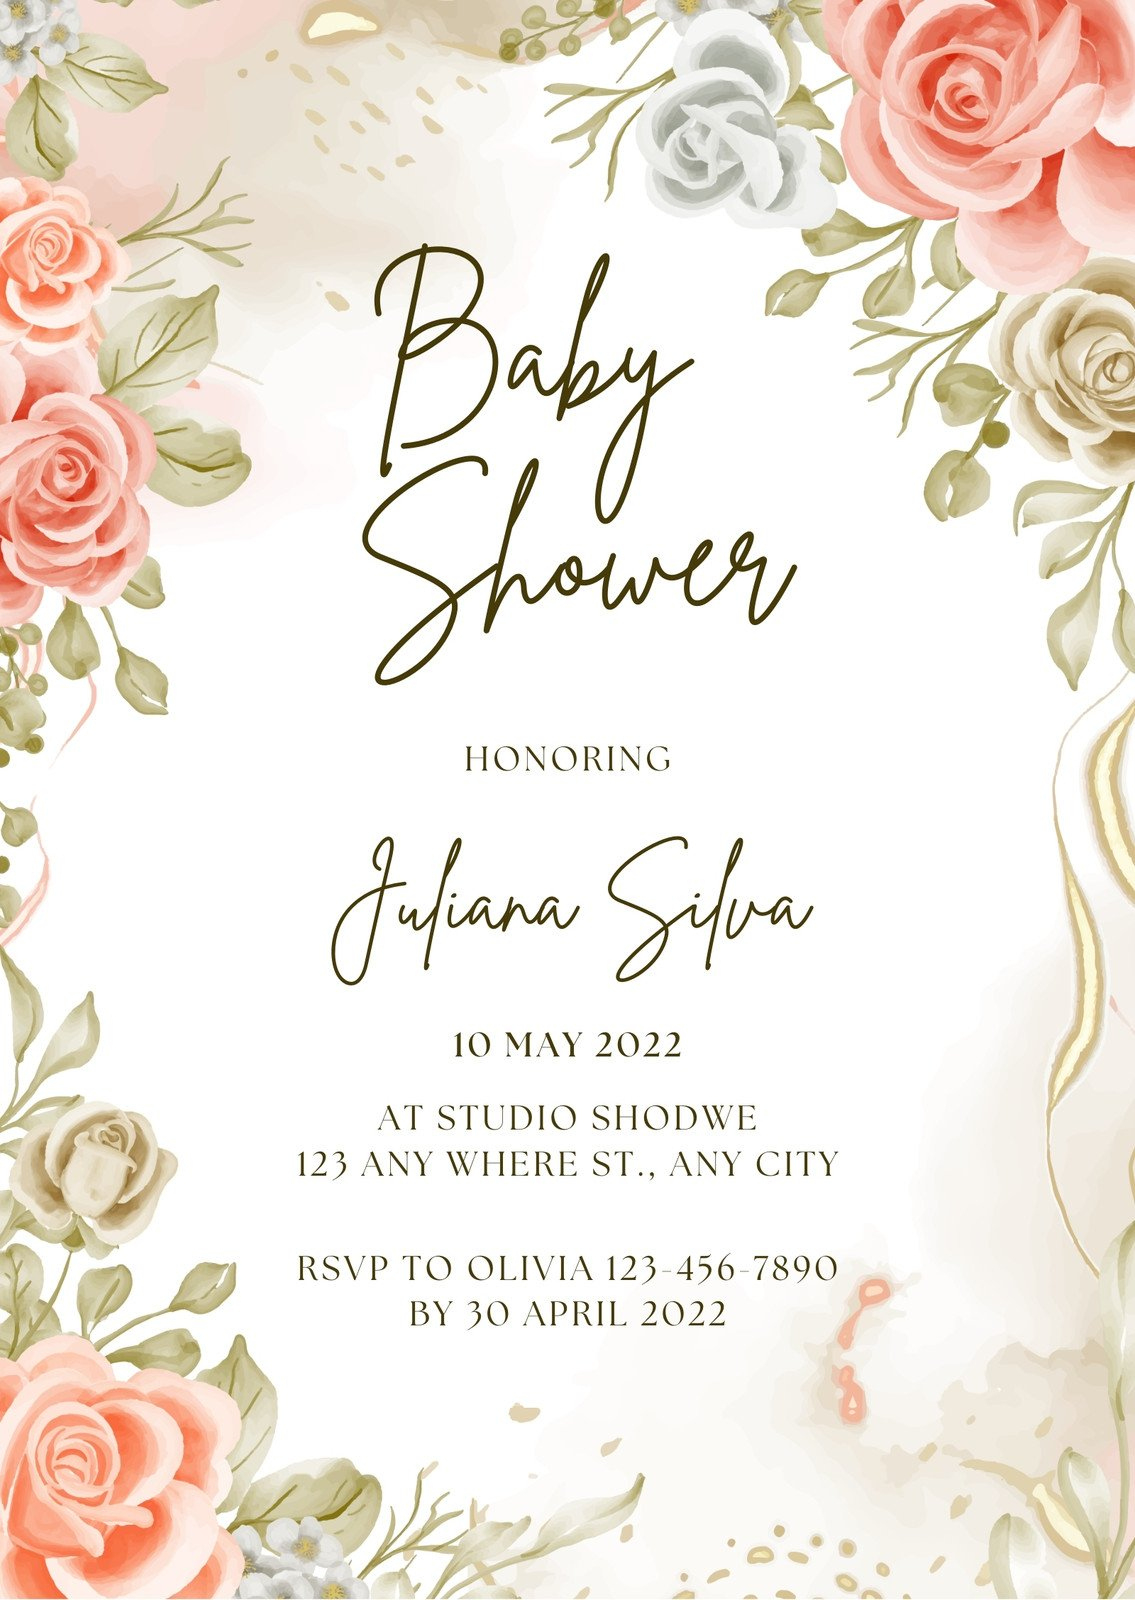 Free, Custom Printable Baby Shower Invitation Templates | Canva regarding Free Printable Baby Shower Invitation Maker